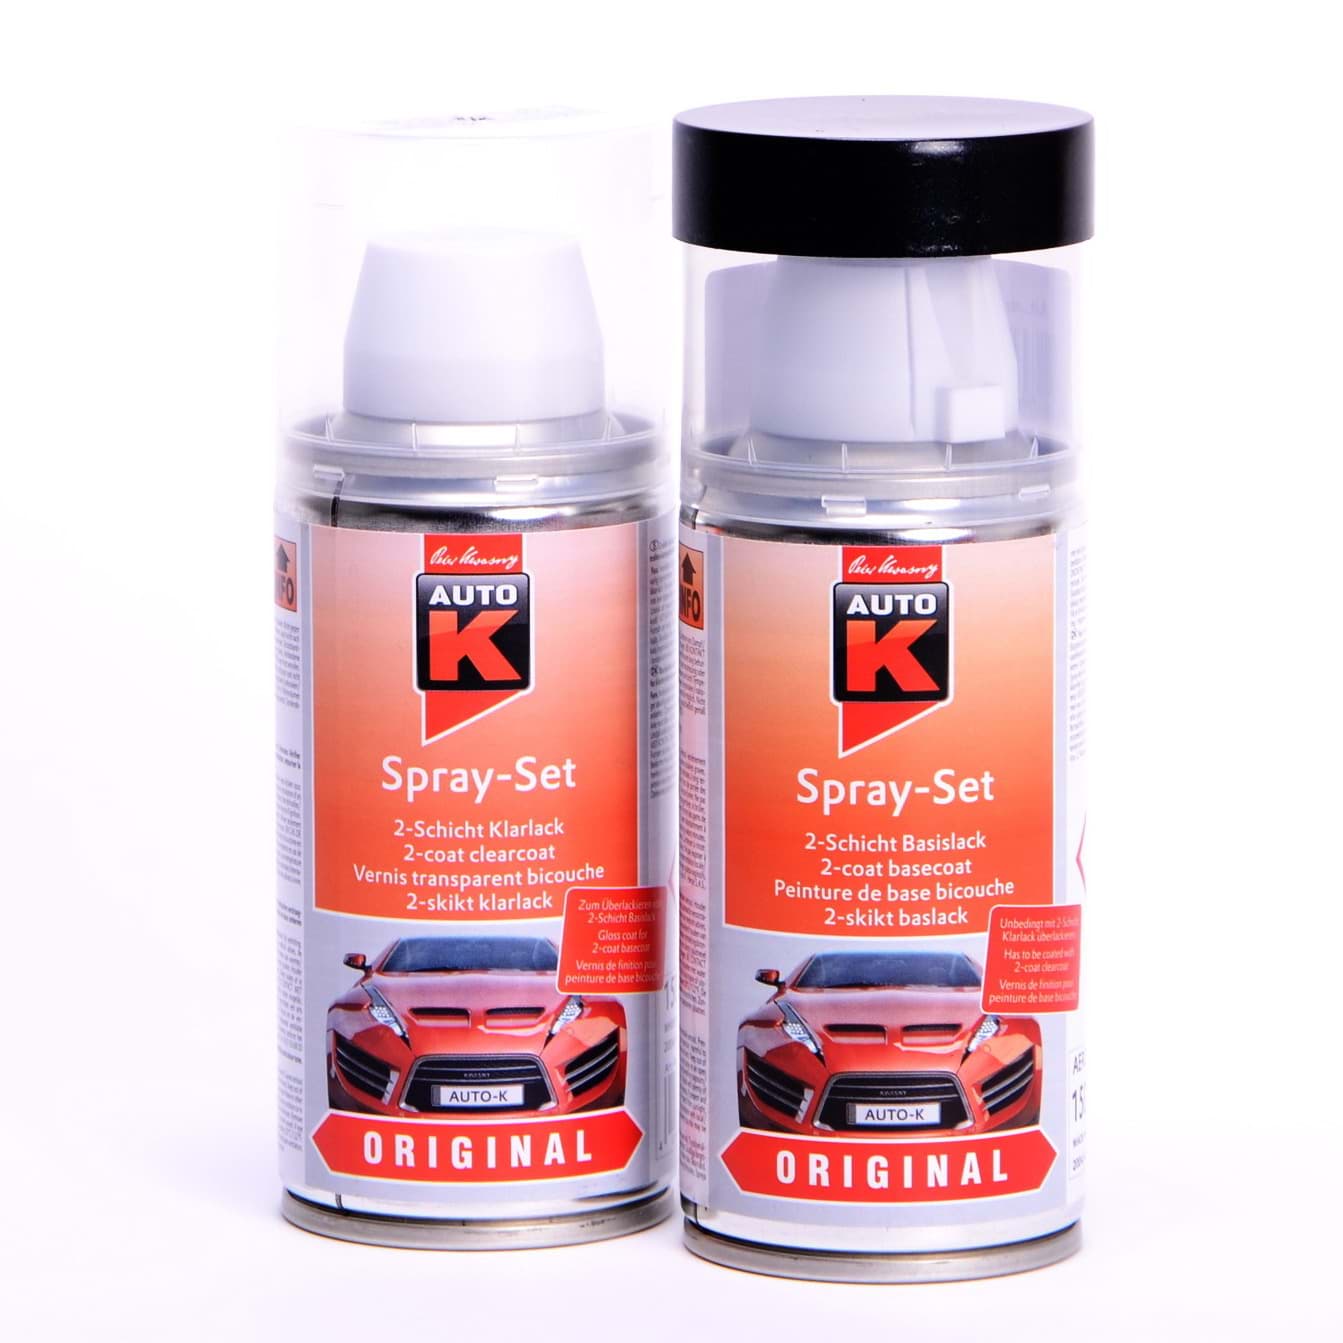 Auto-K Spray-Set Autolack für Fiat 426 Midnight blau met 24666 resmi